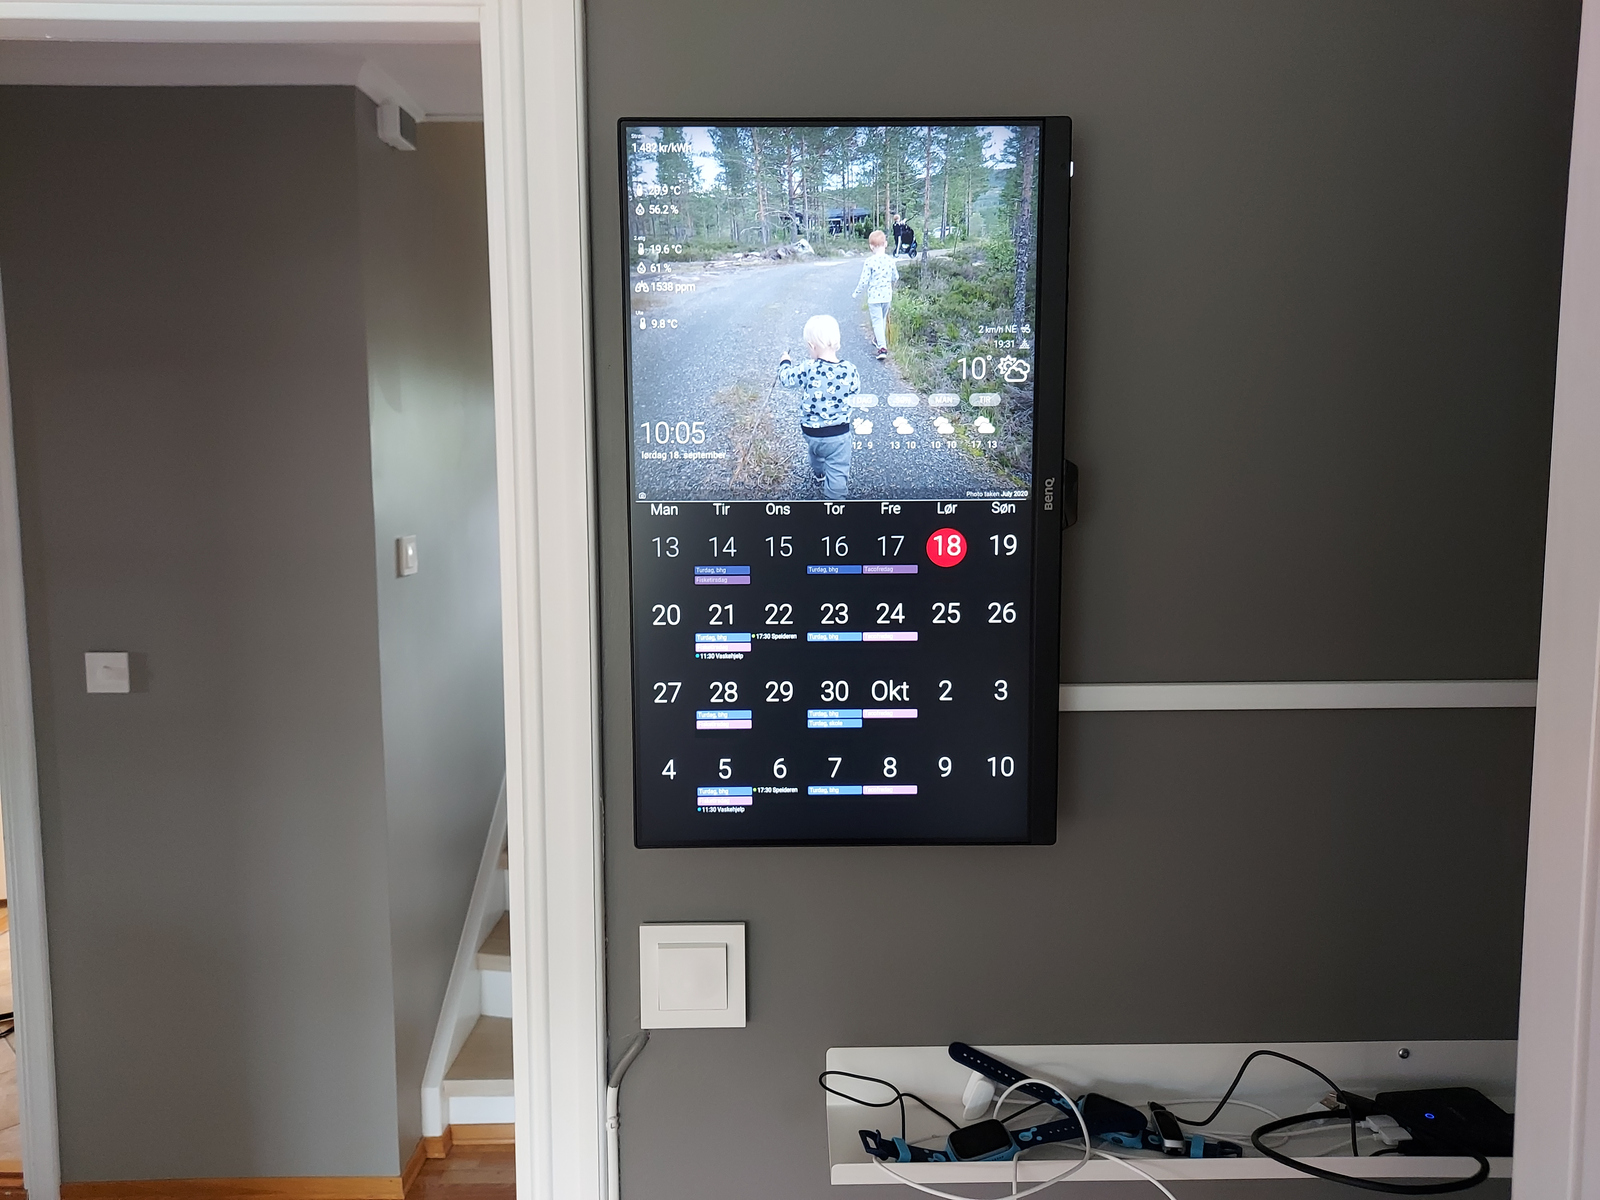 Anybody use a touchscreen wall display like Dakboard?